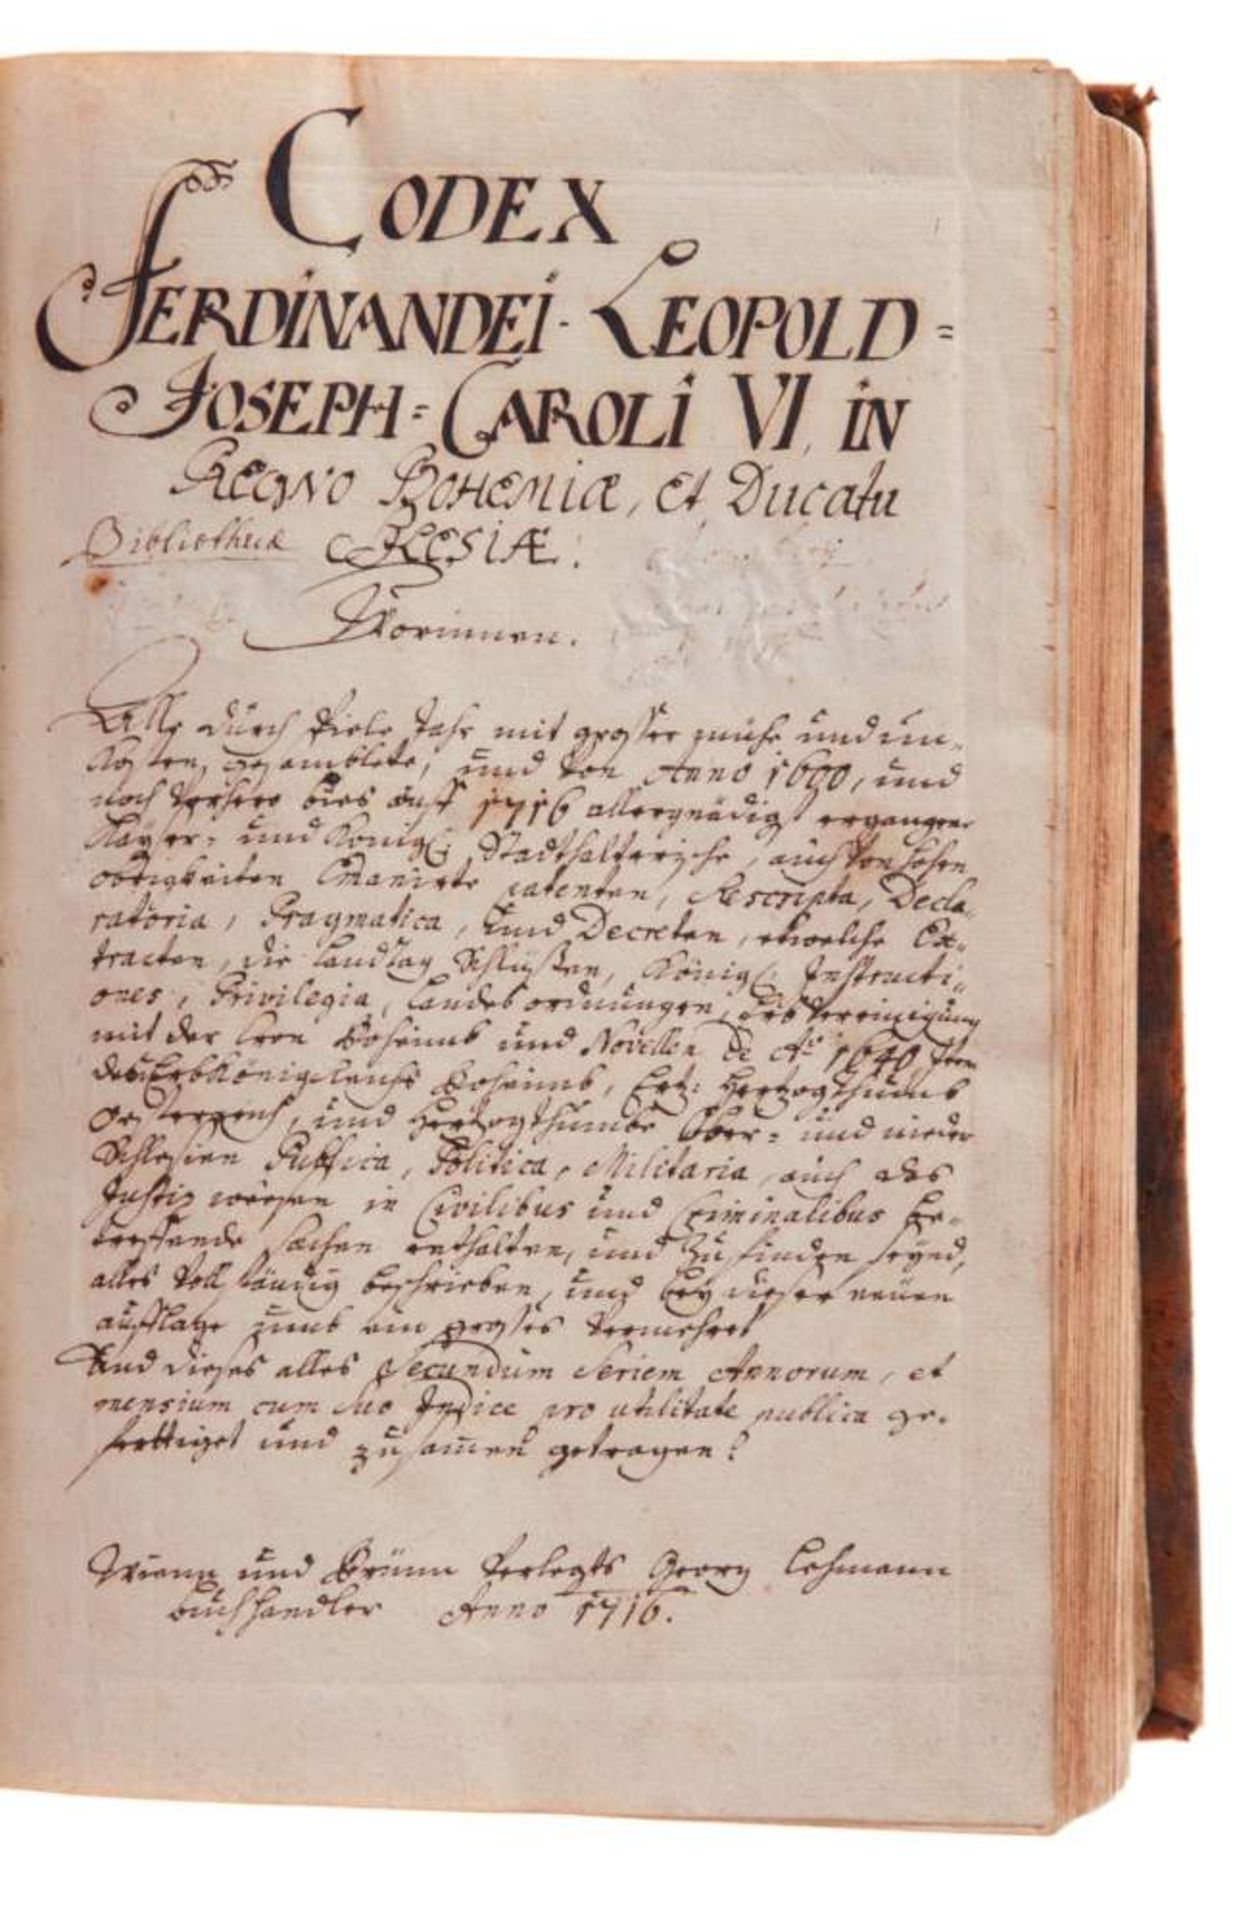 "Codex Ferdinandei-Leopold-Joseph-Caroli VI, in Regno Bohemiae, et Ducatu Silesiae". Deutsche - Bild 2 aus 3